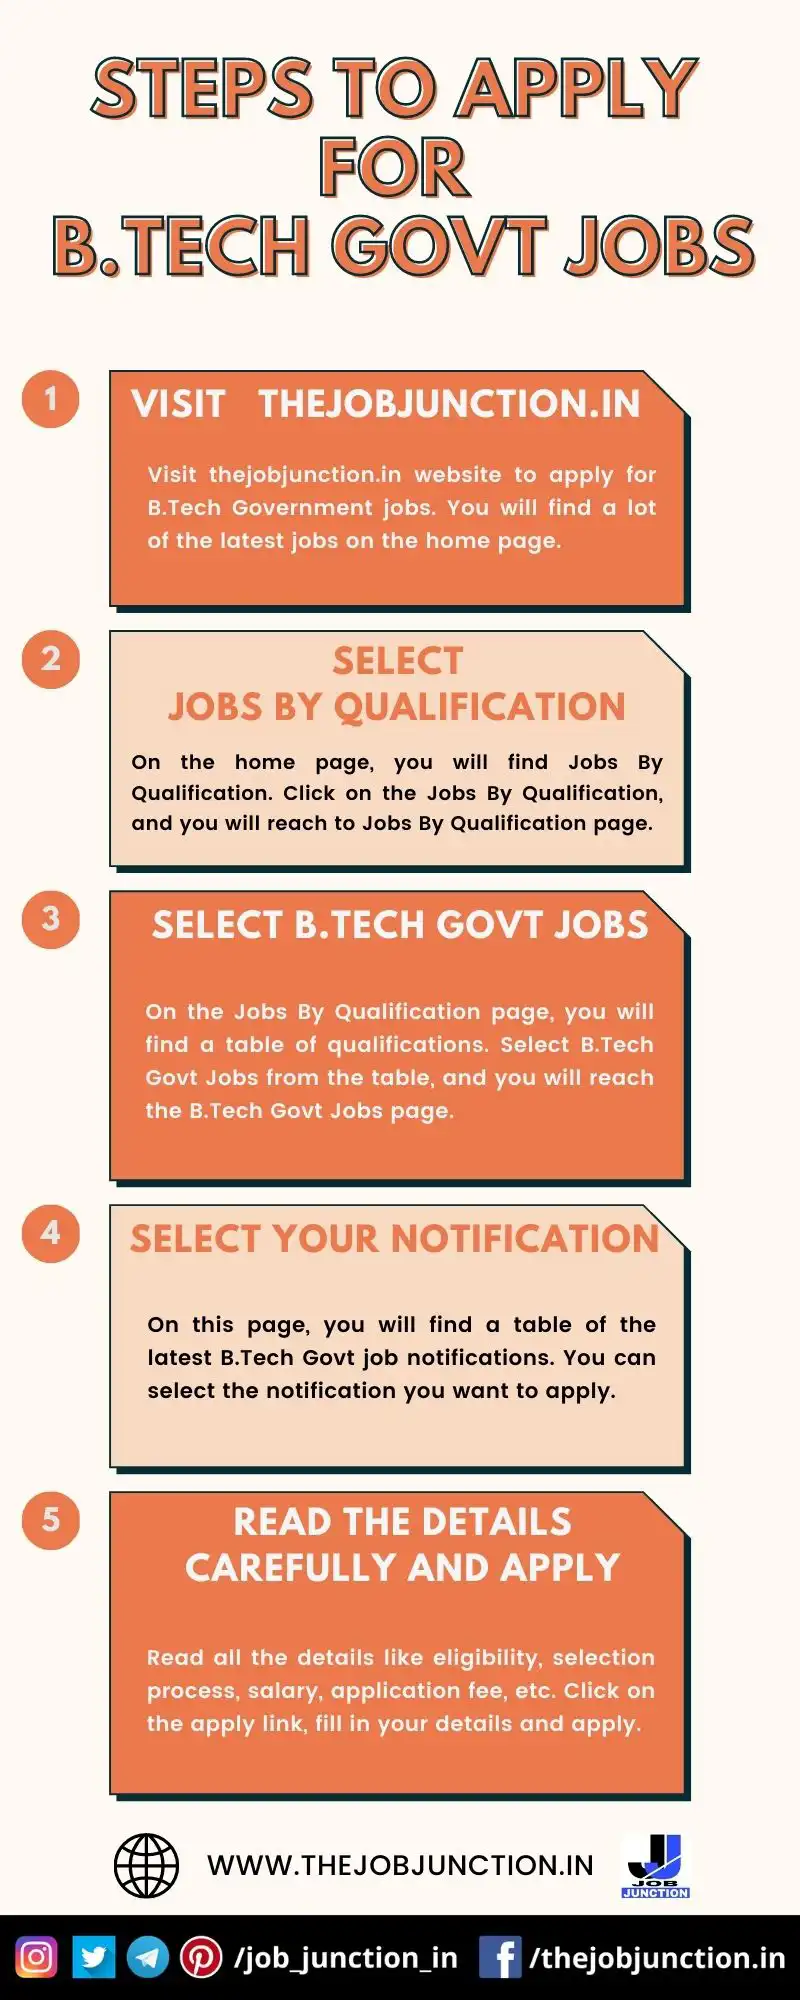 STEPS TO APPLY FOR B.TECH GOVT JOBS